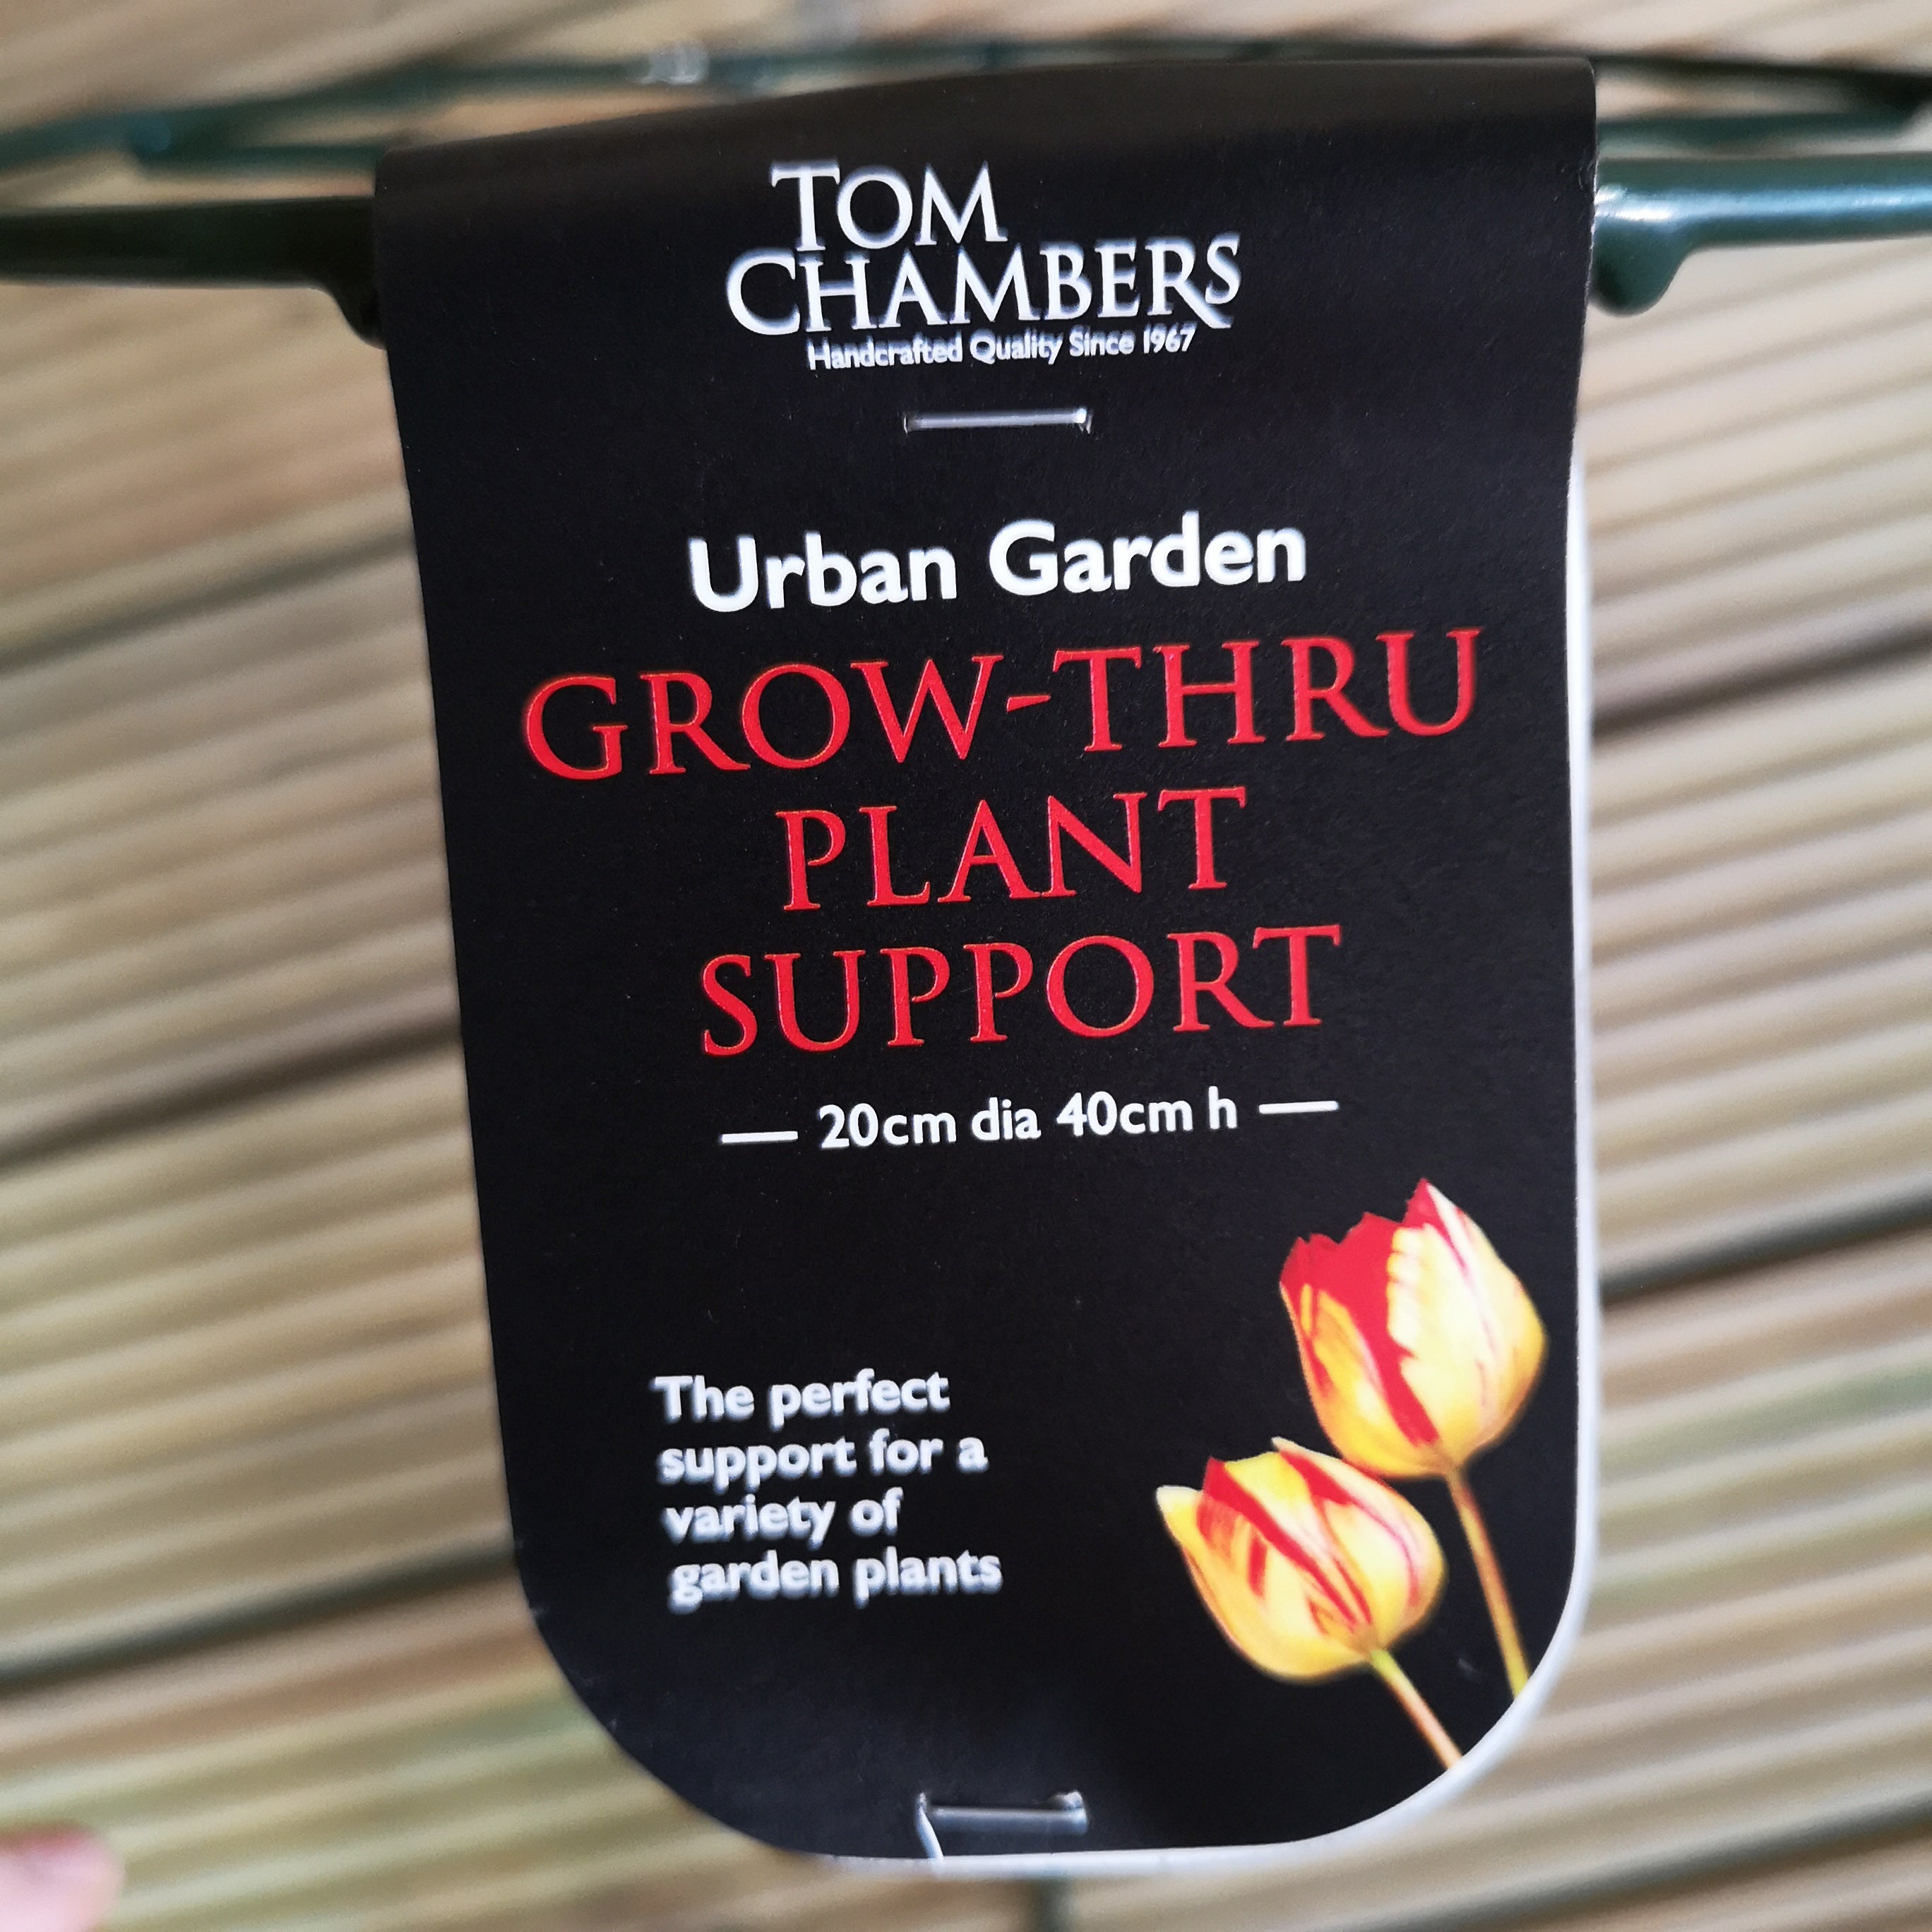 Tom Chambers Urban Dark Green Metal Herbaceous Garden Plant Support Grow Through Small 40cm x 20cm